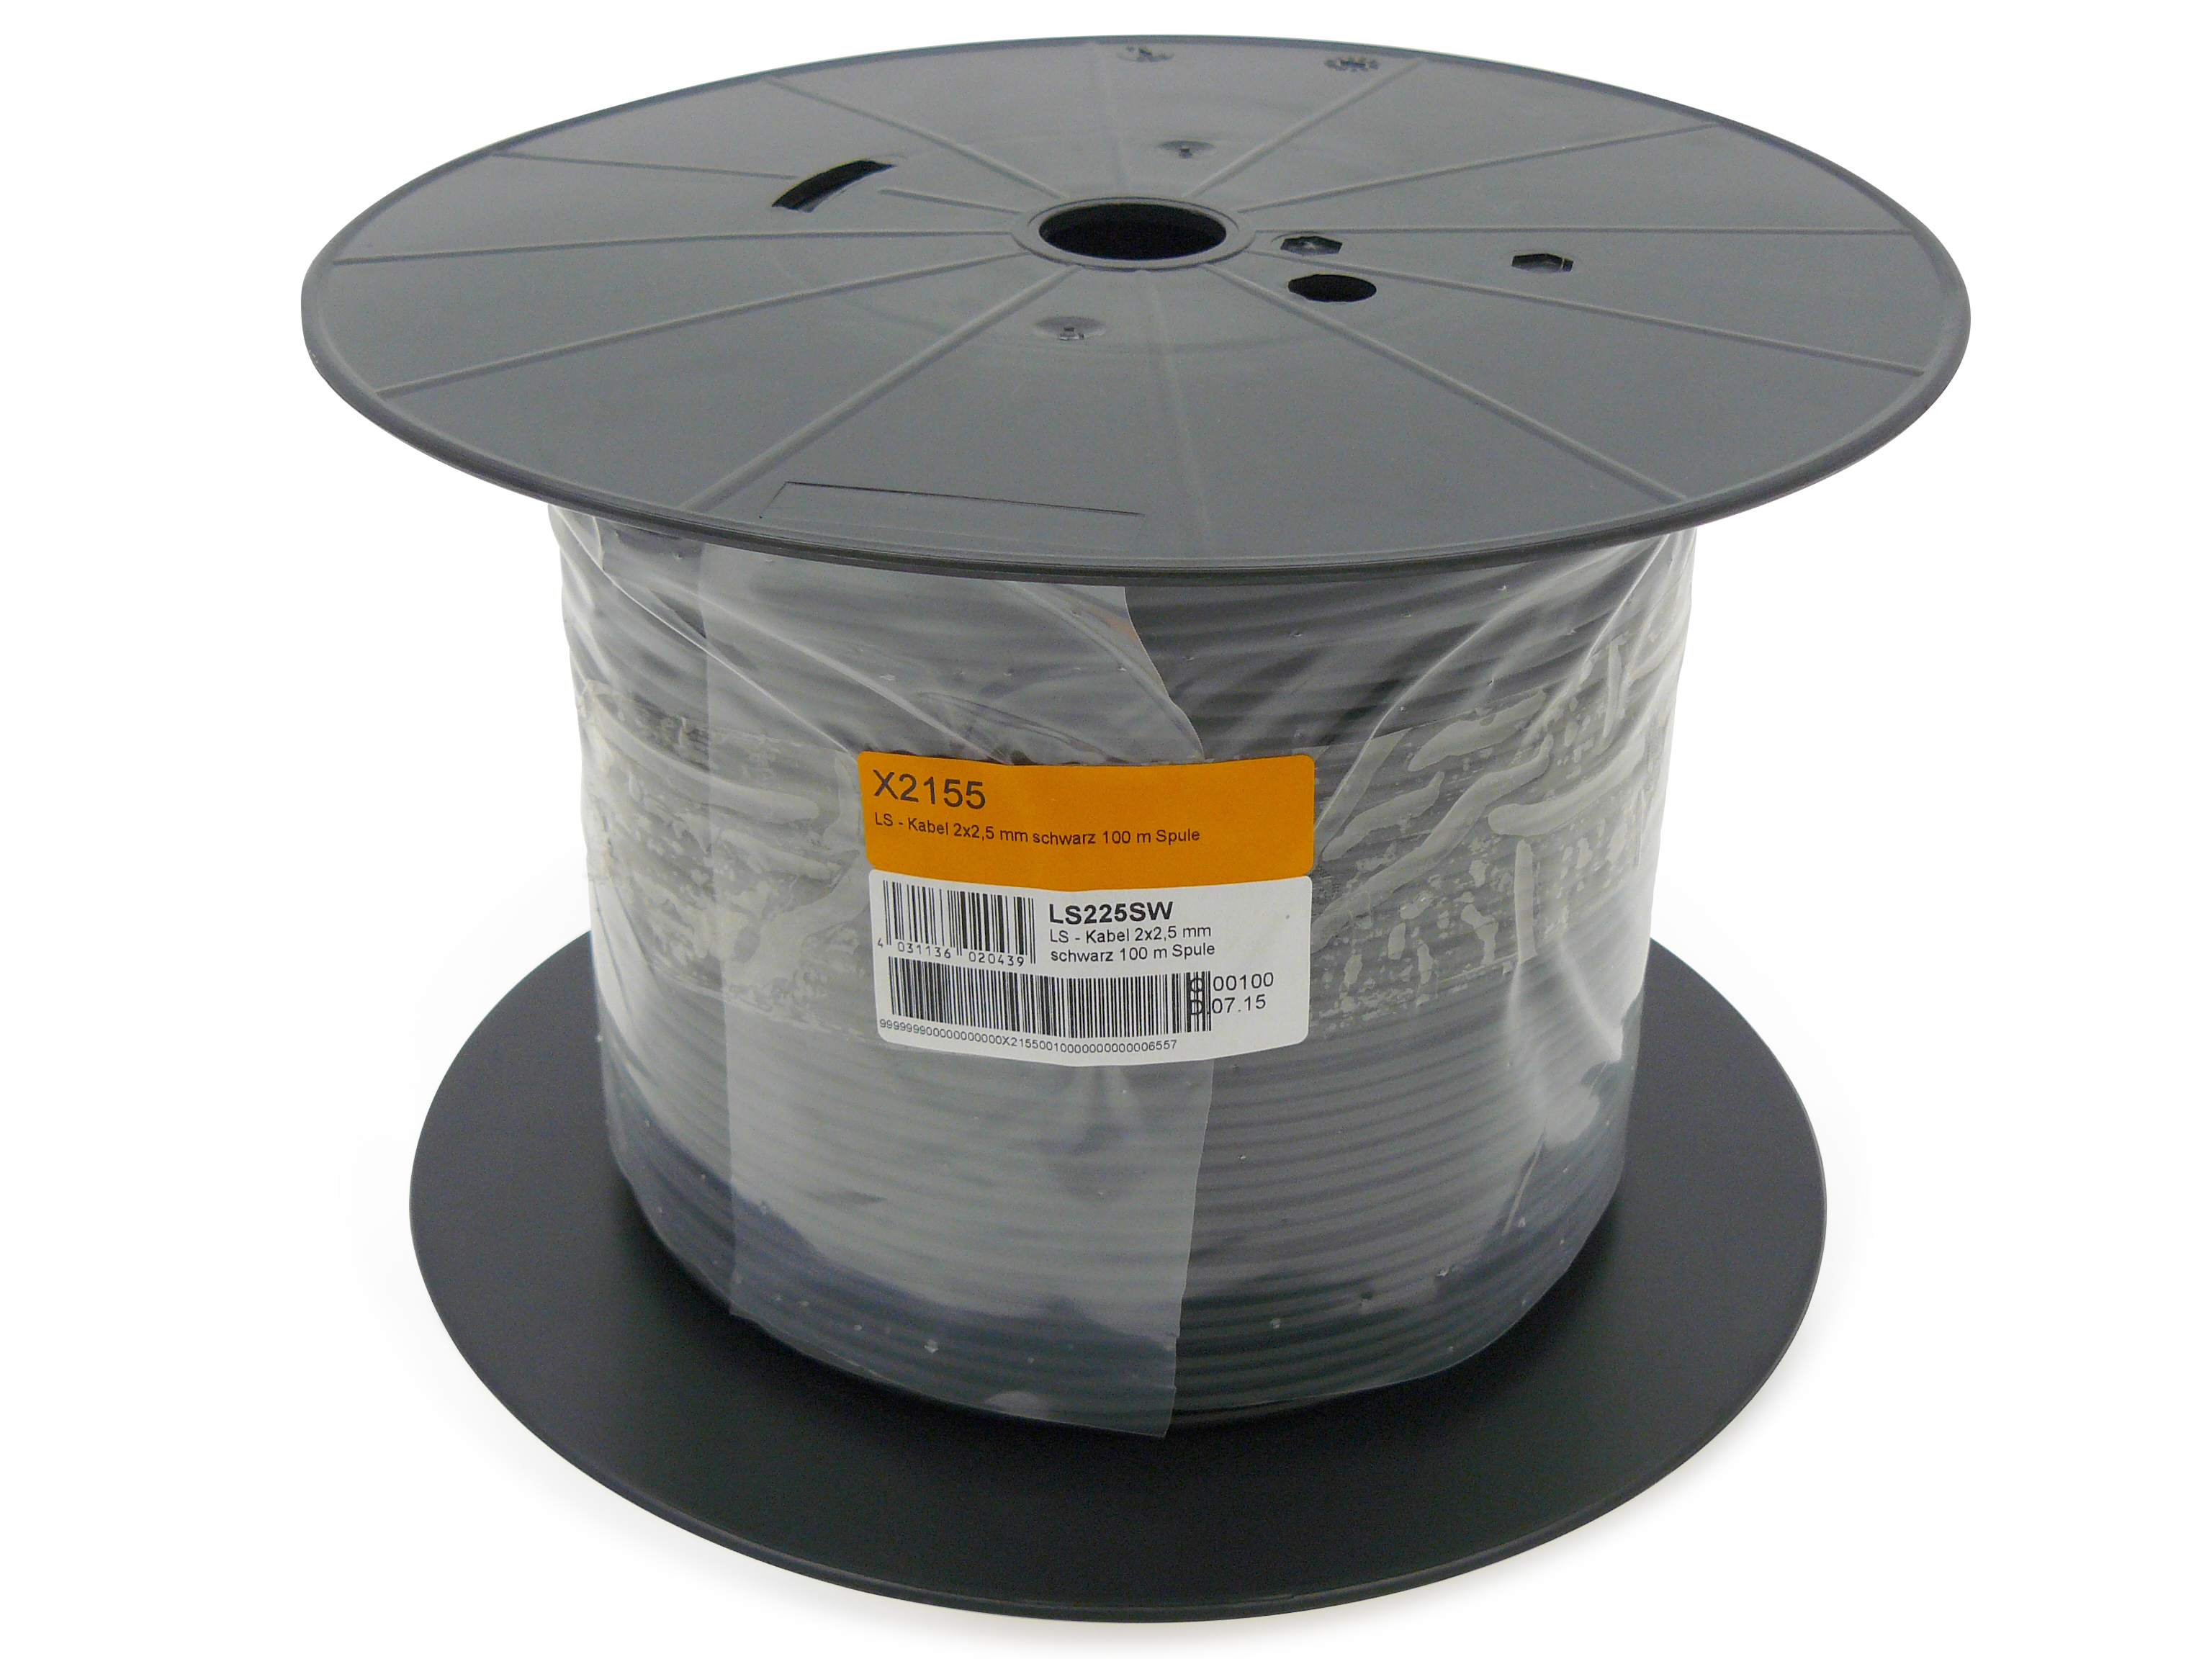 LS - Kabel 2x2,5 mm schwarz 100 m Spule